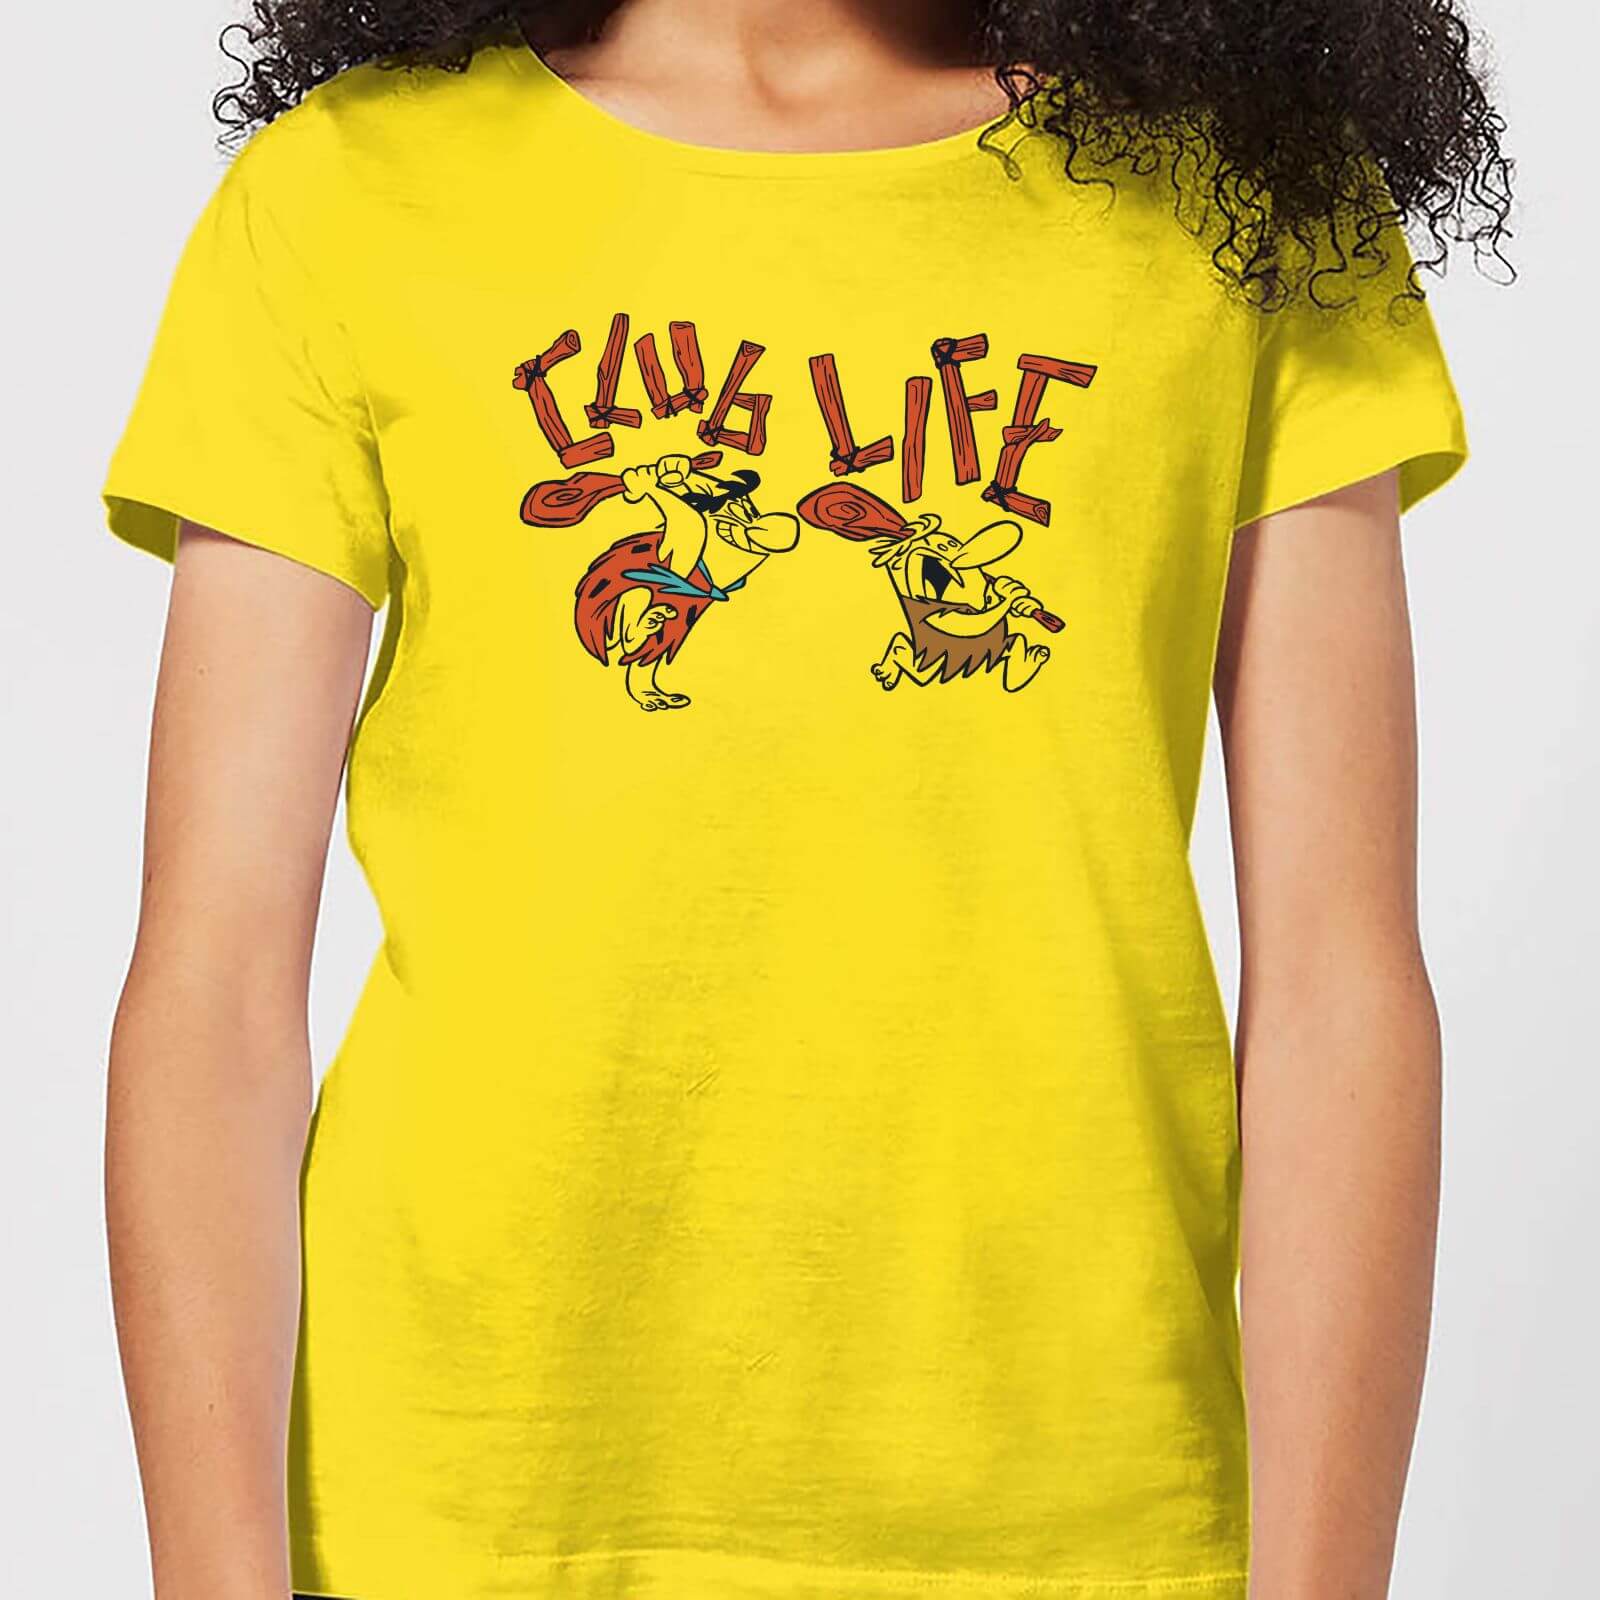 The Flintstones Club Life Women's T-Shirt - Yellow - L - Yellow